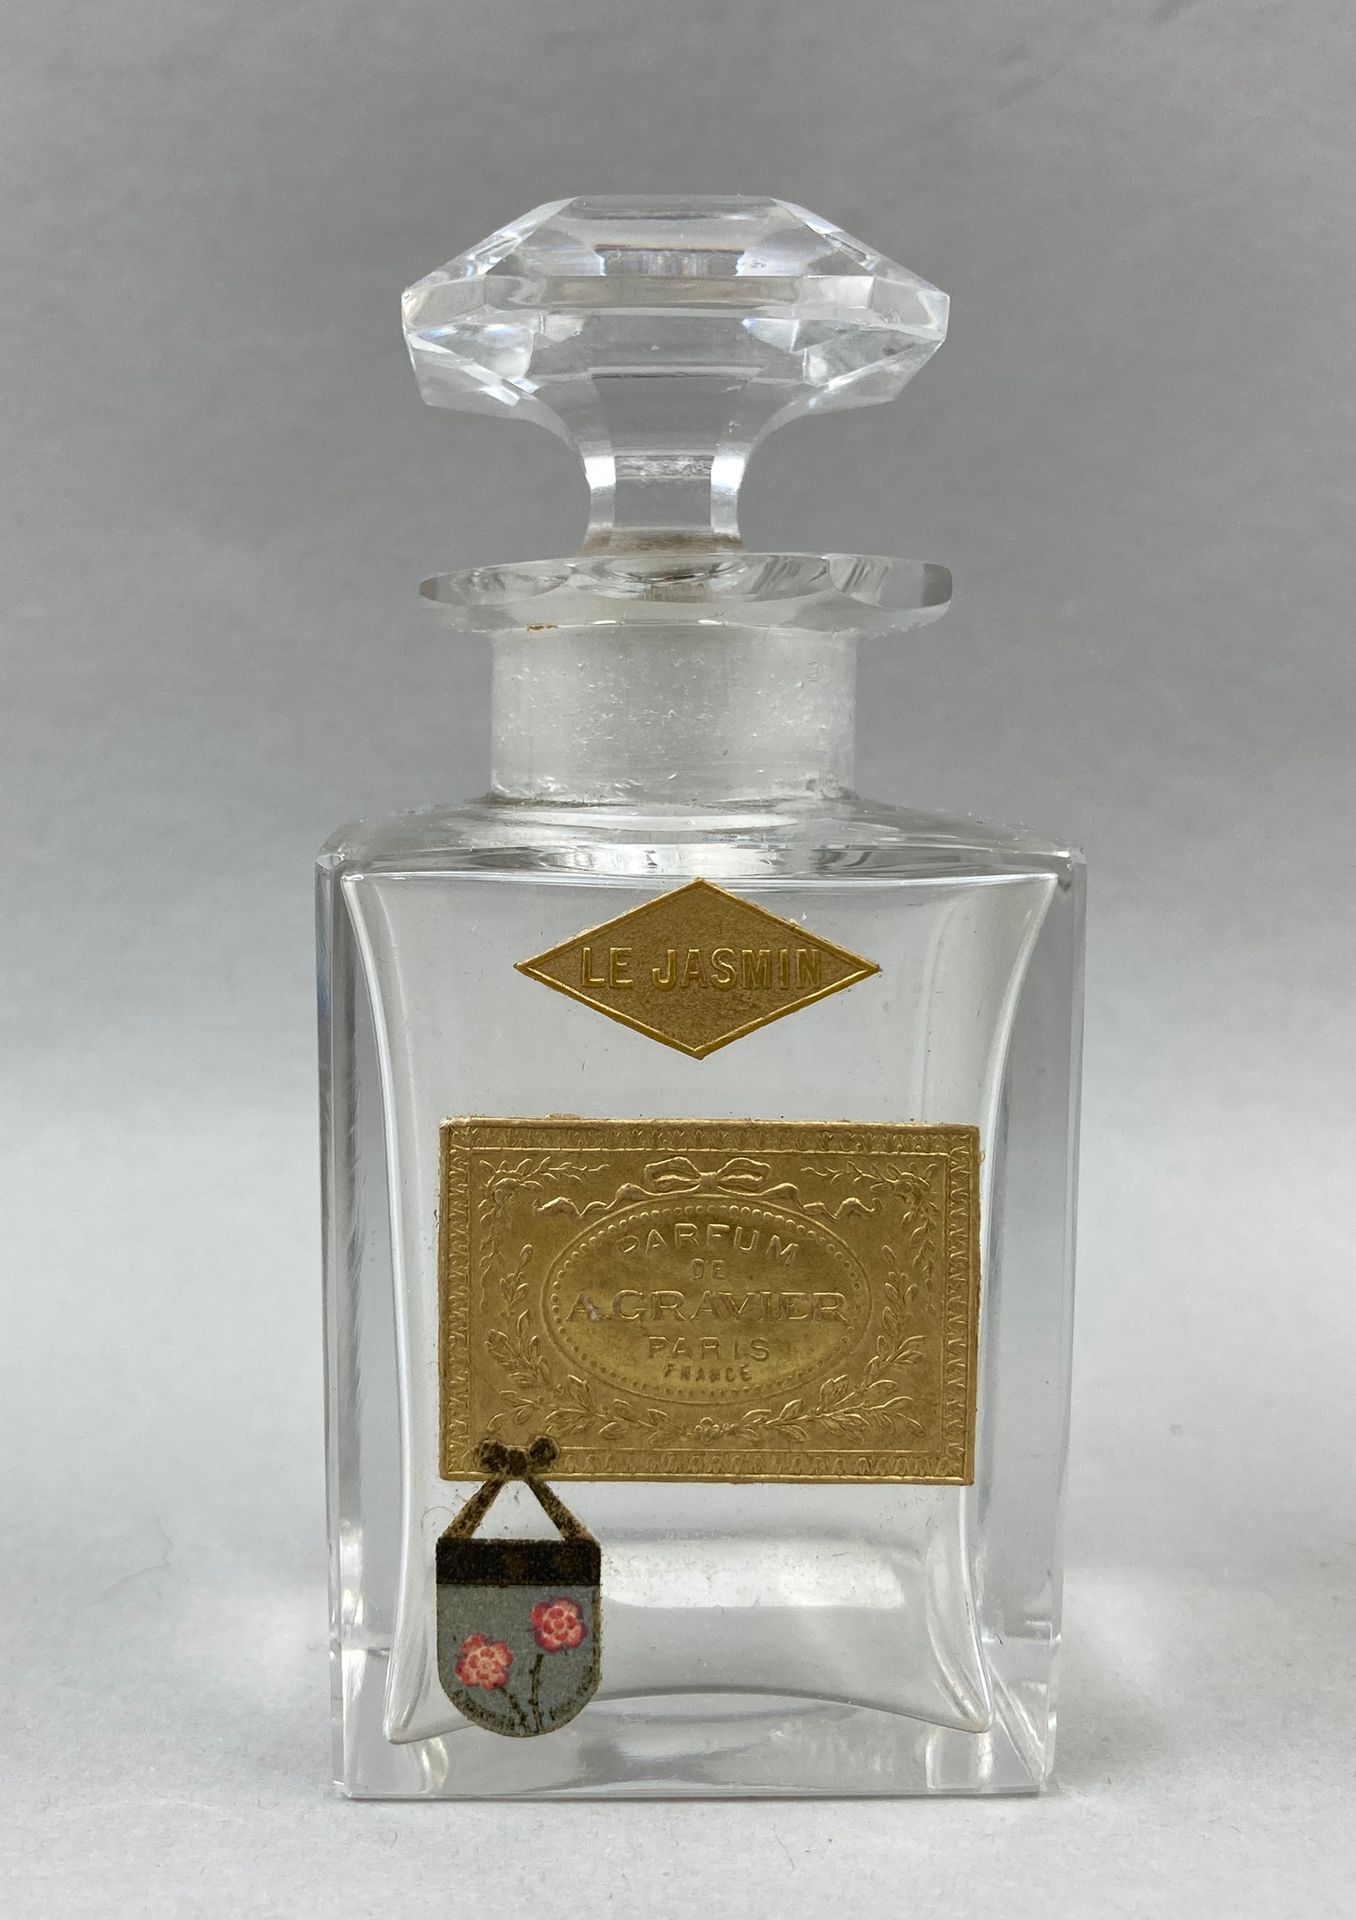 Null A.GRAVIER "Le jasmin

方形水晶瓶，两个金色标签，标题为 "Le Jasmin parfum de A. Gravier Pari&hellip;